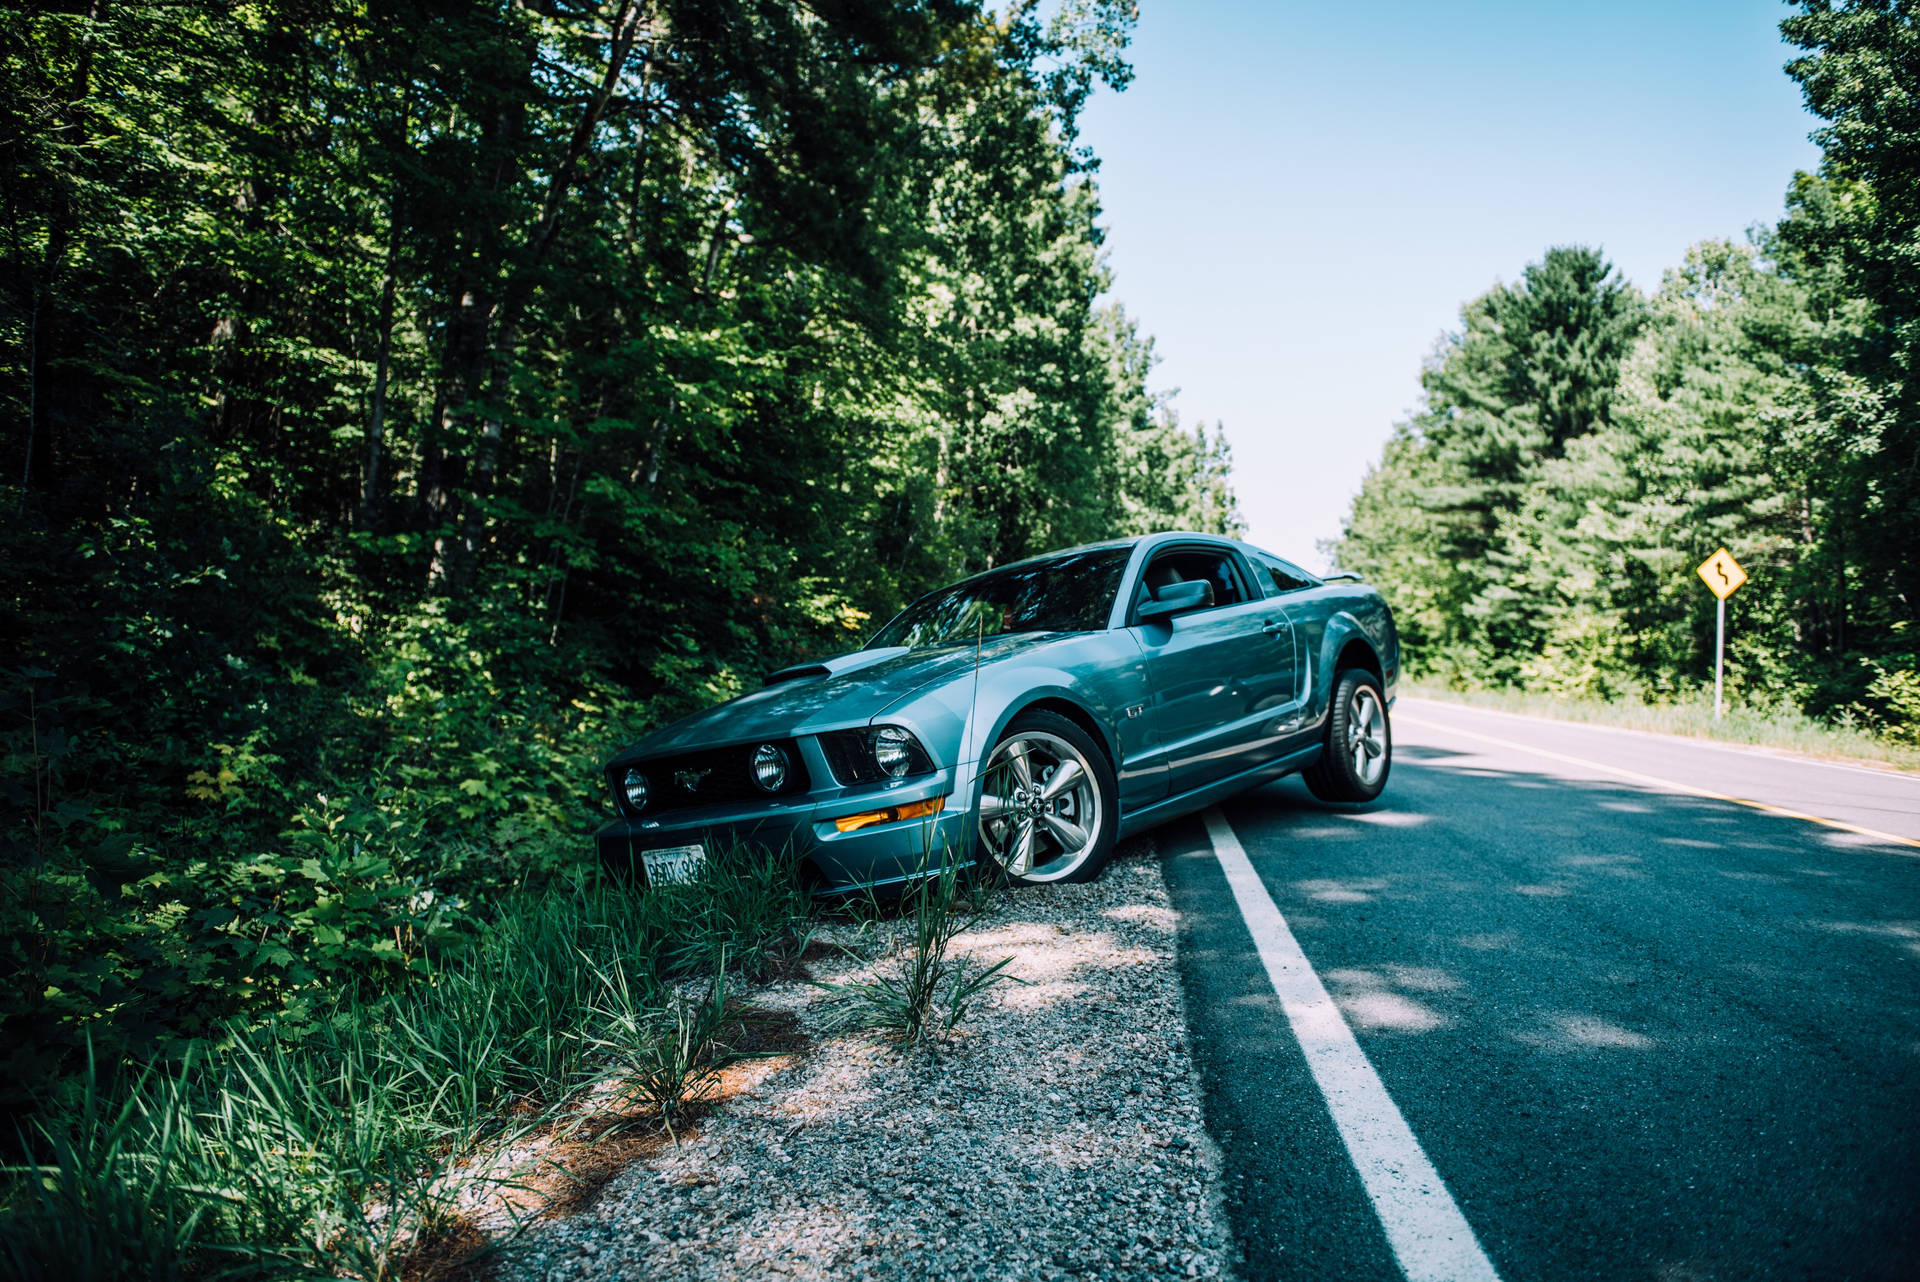 Nyd turen med denne fede Mustang 🚘 Wallpaper